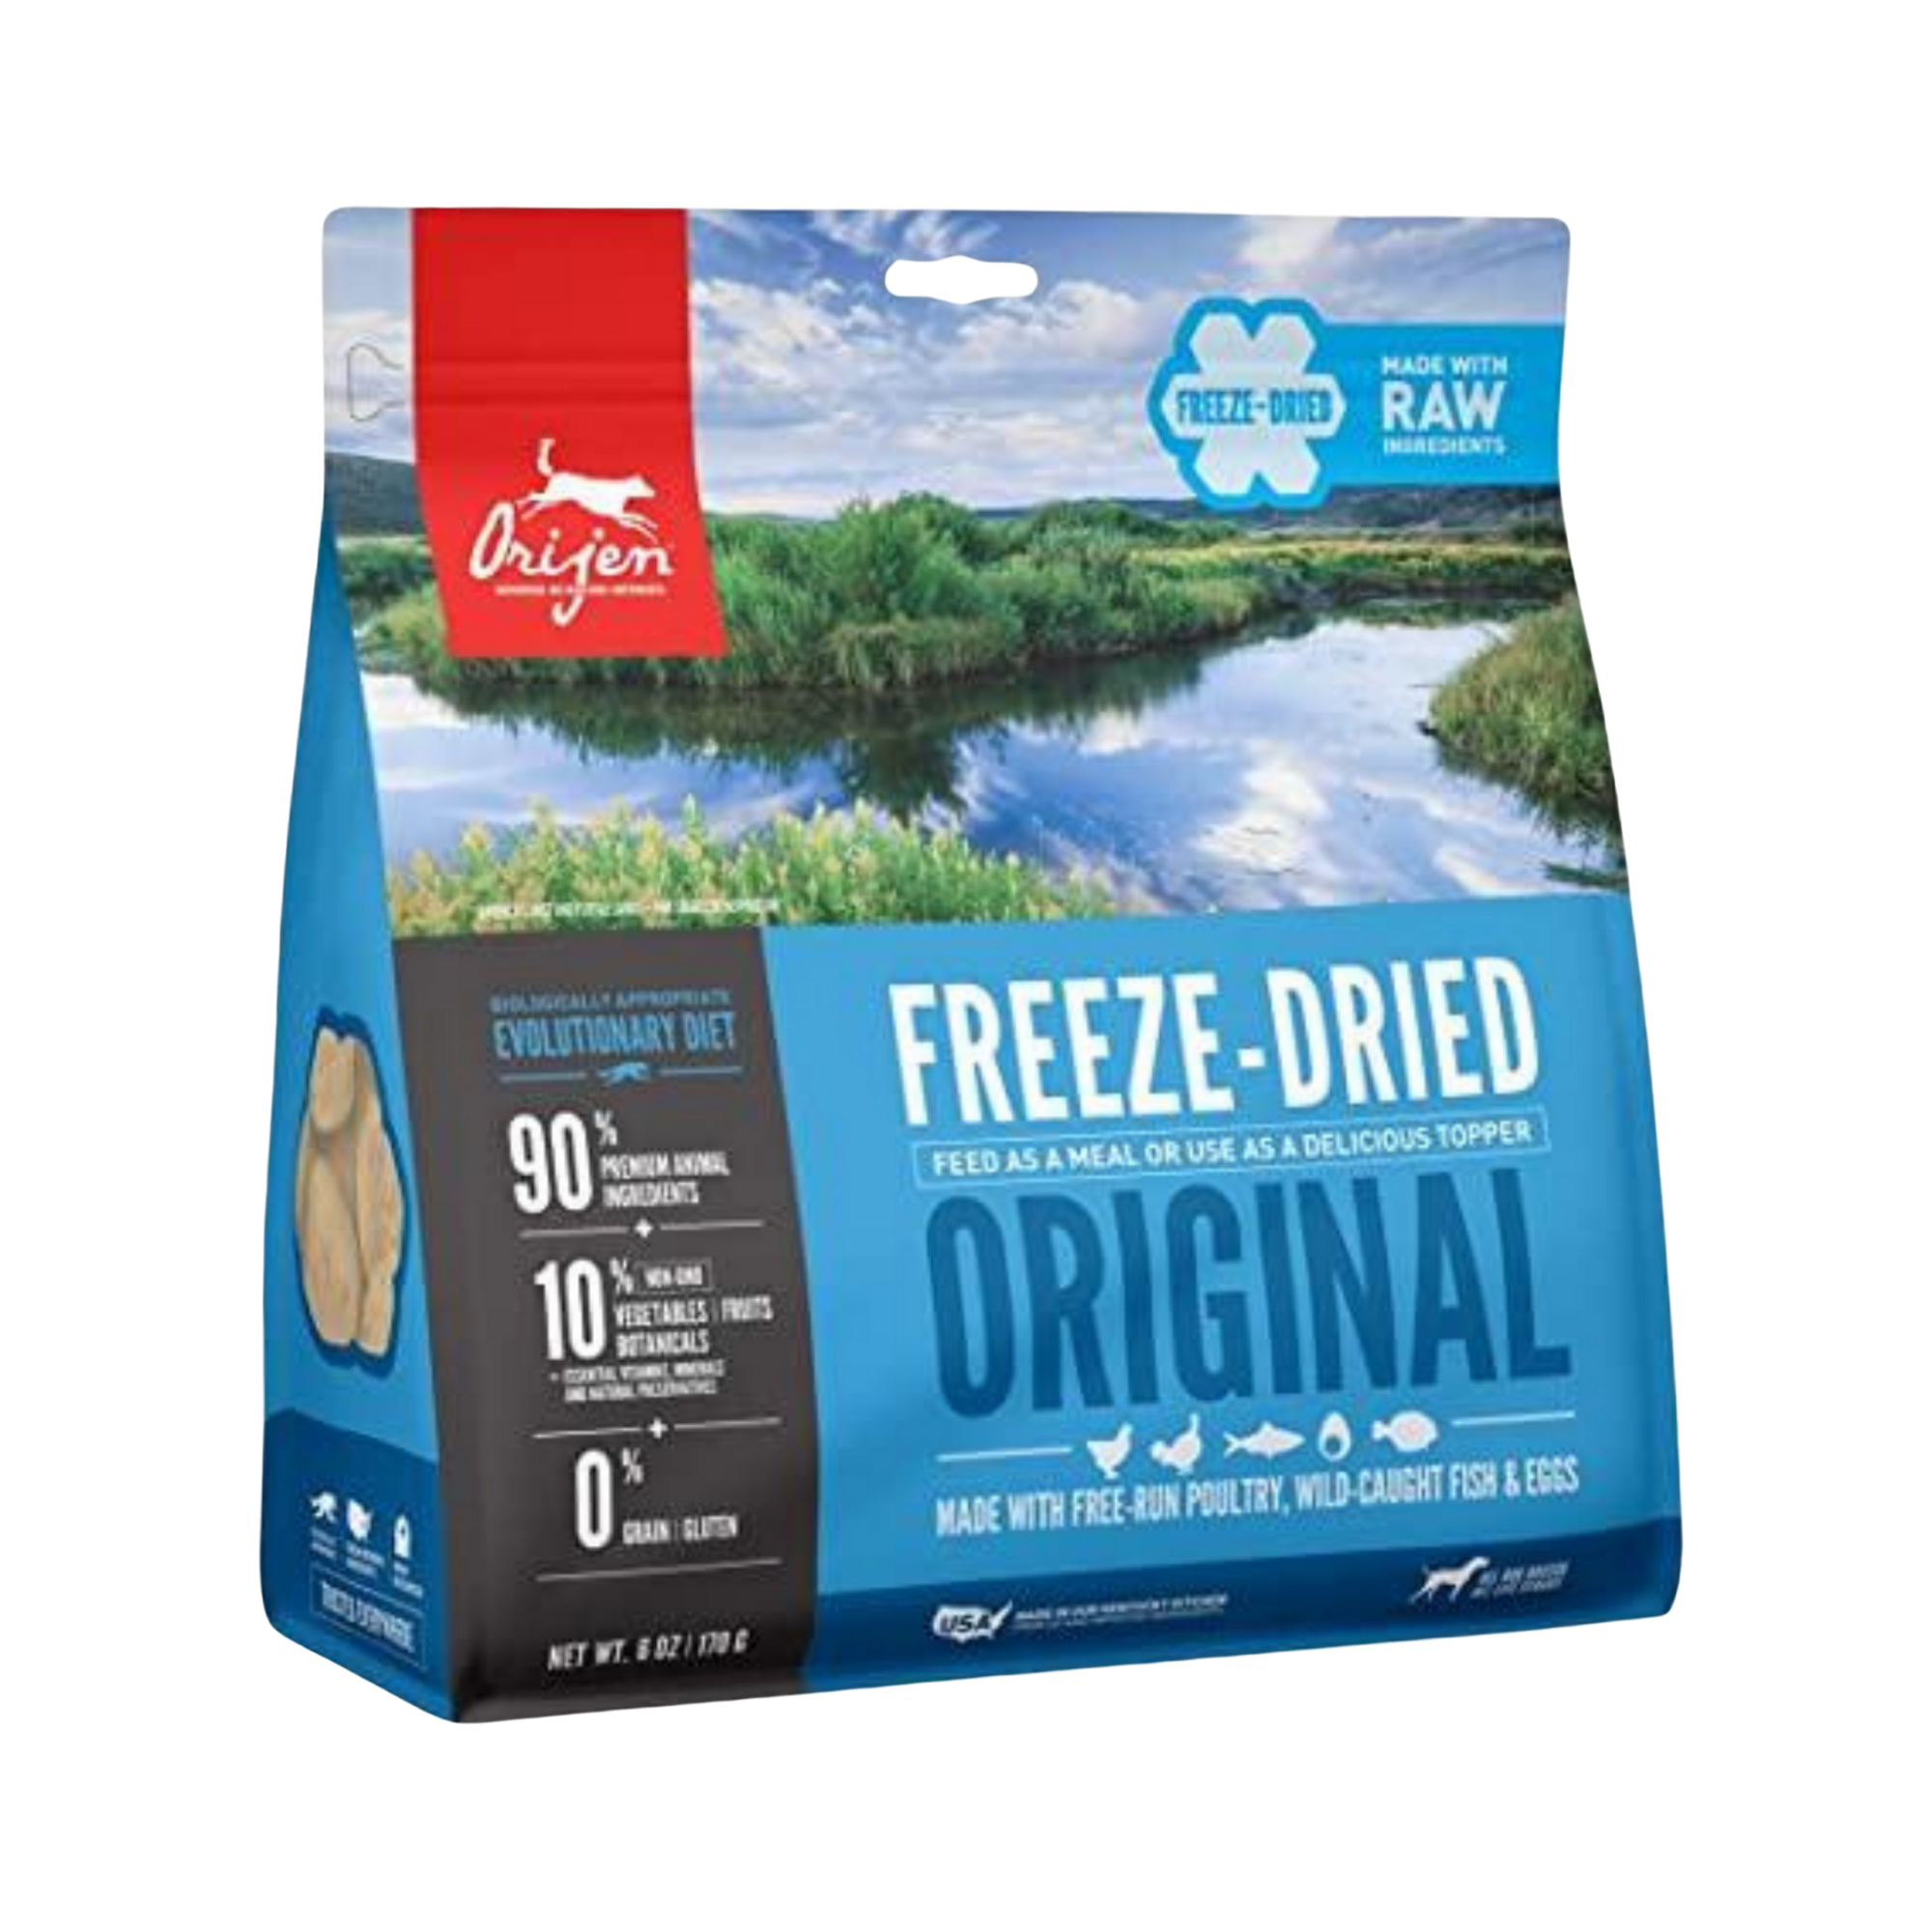 Orijen Original Freeze-Dried Dog Food - Mutts & Co.